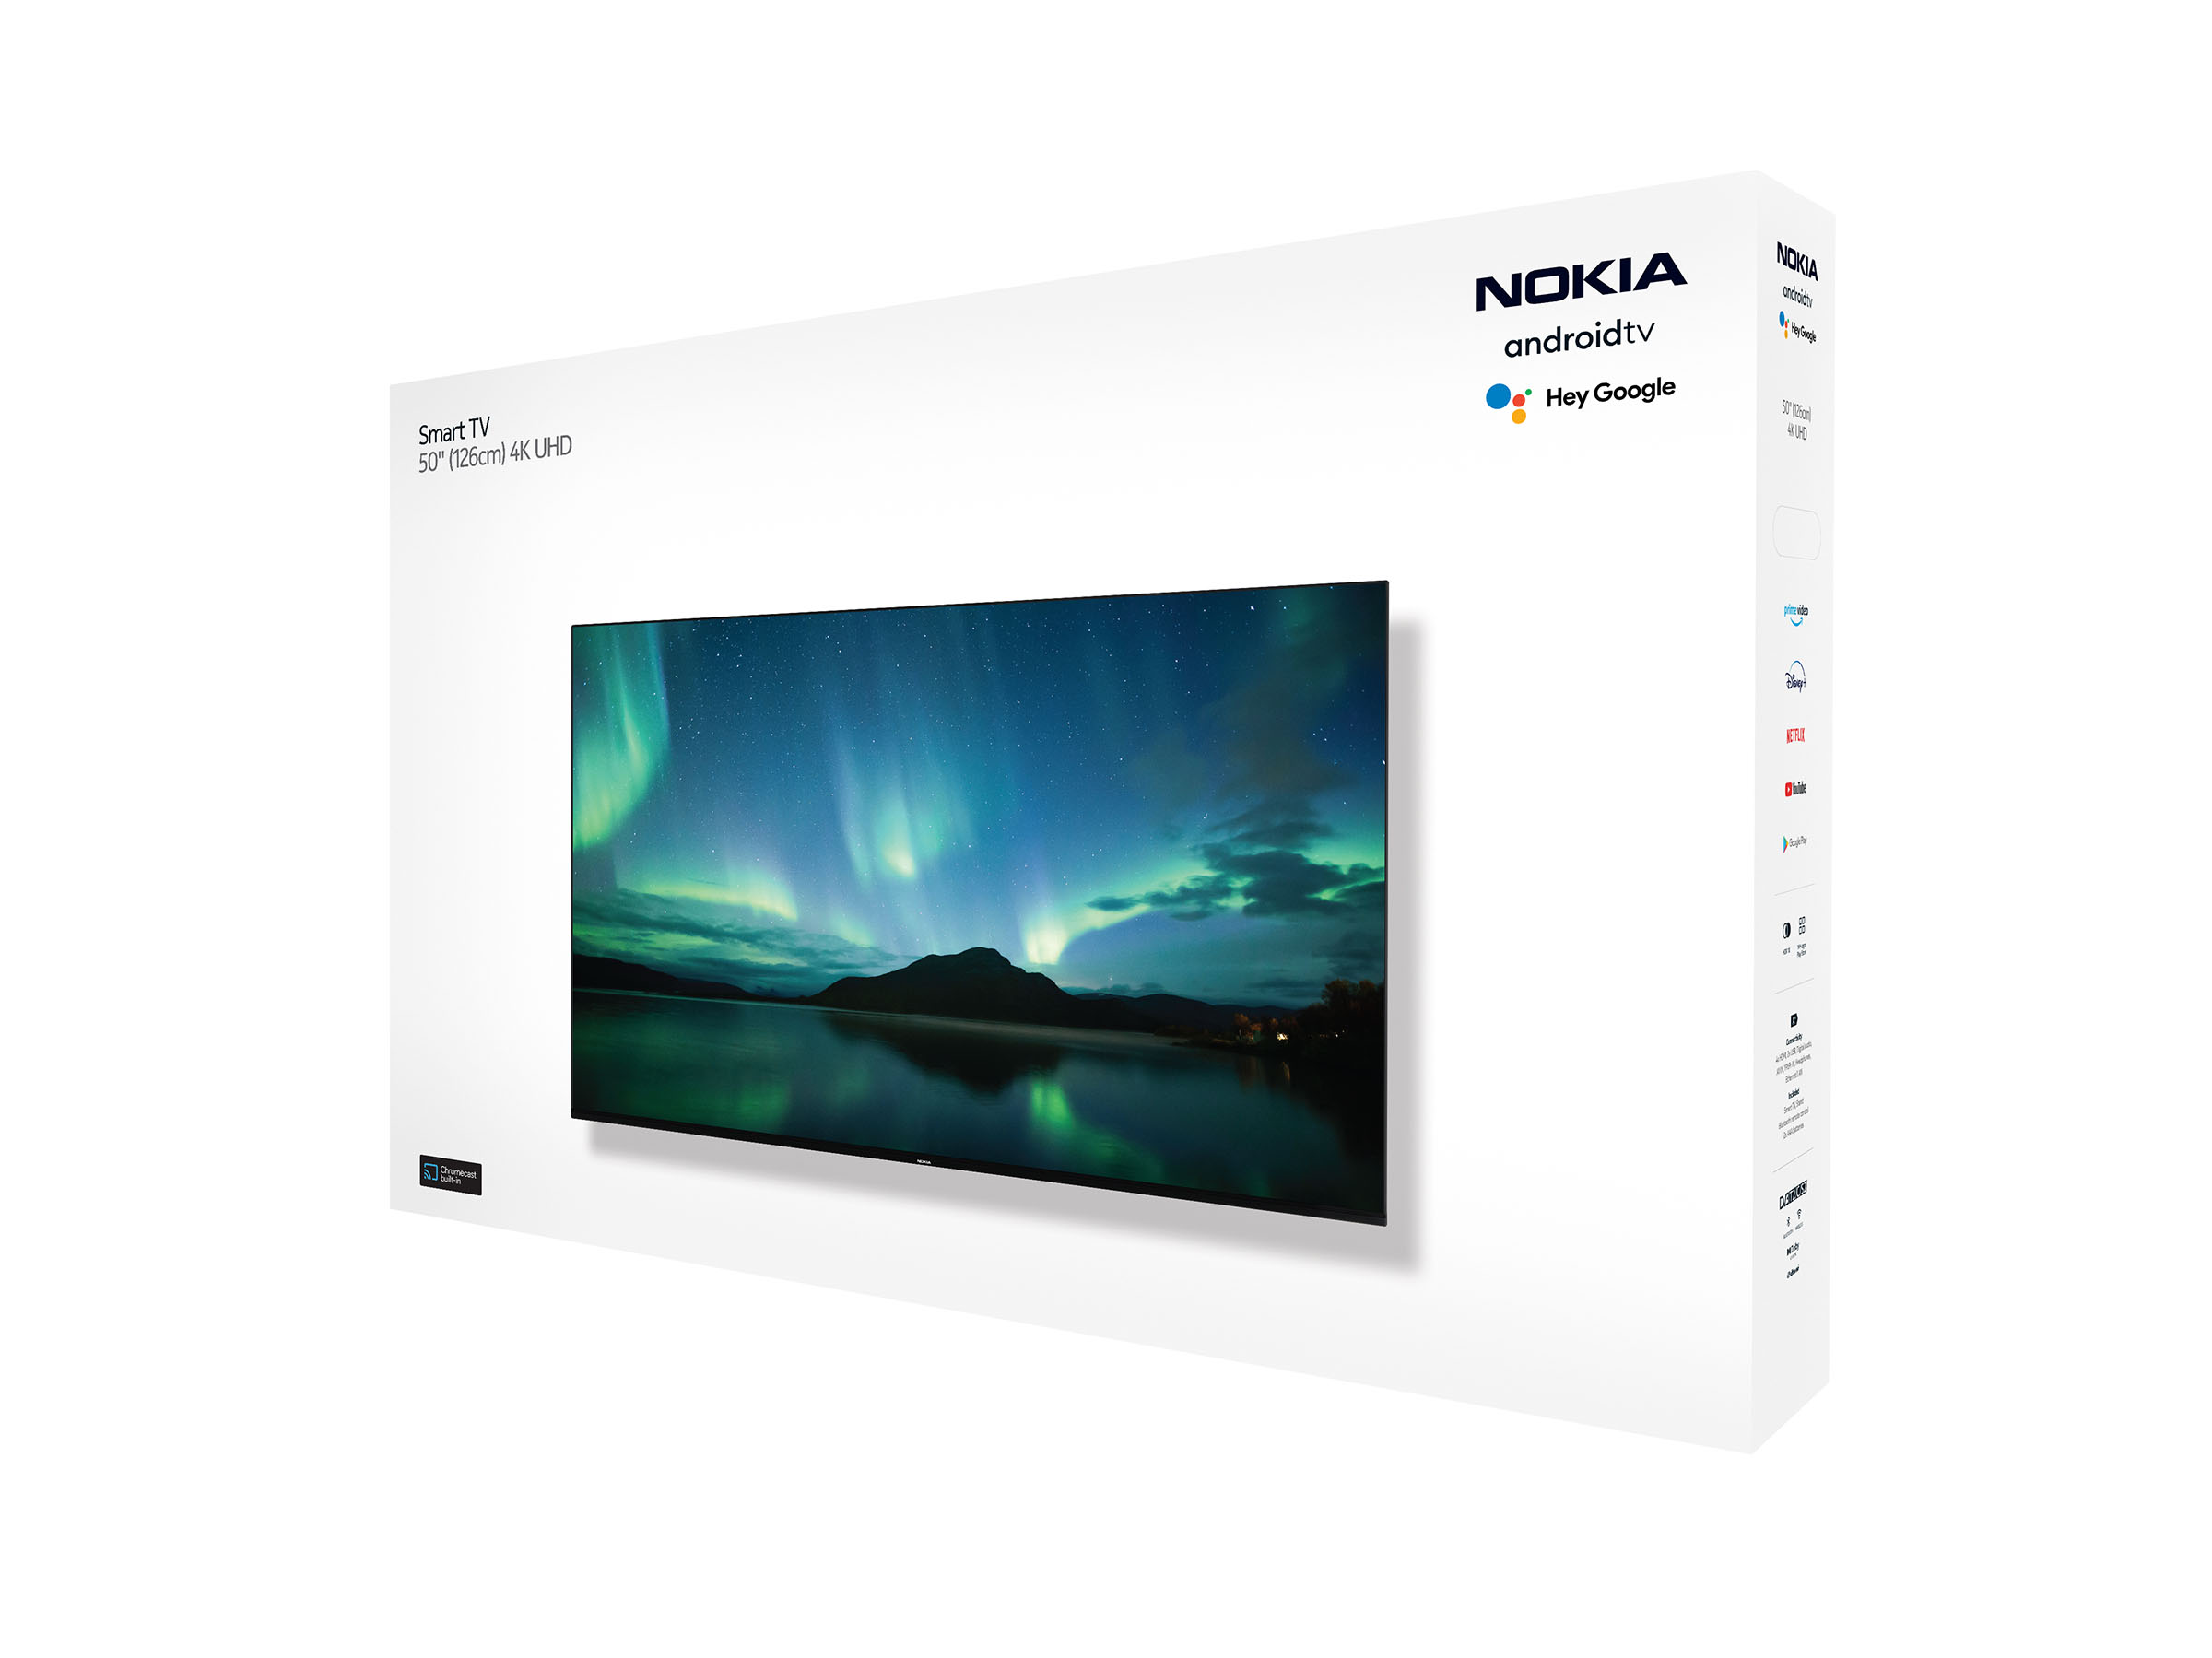 Nokia 50" 4K UHD Smart TV on Android TV